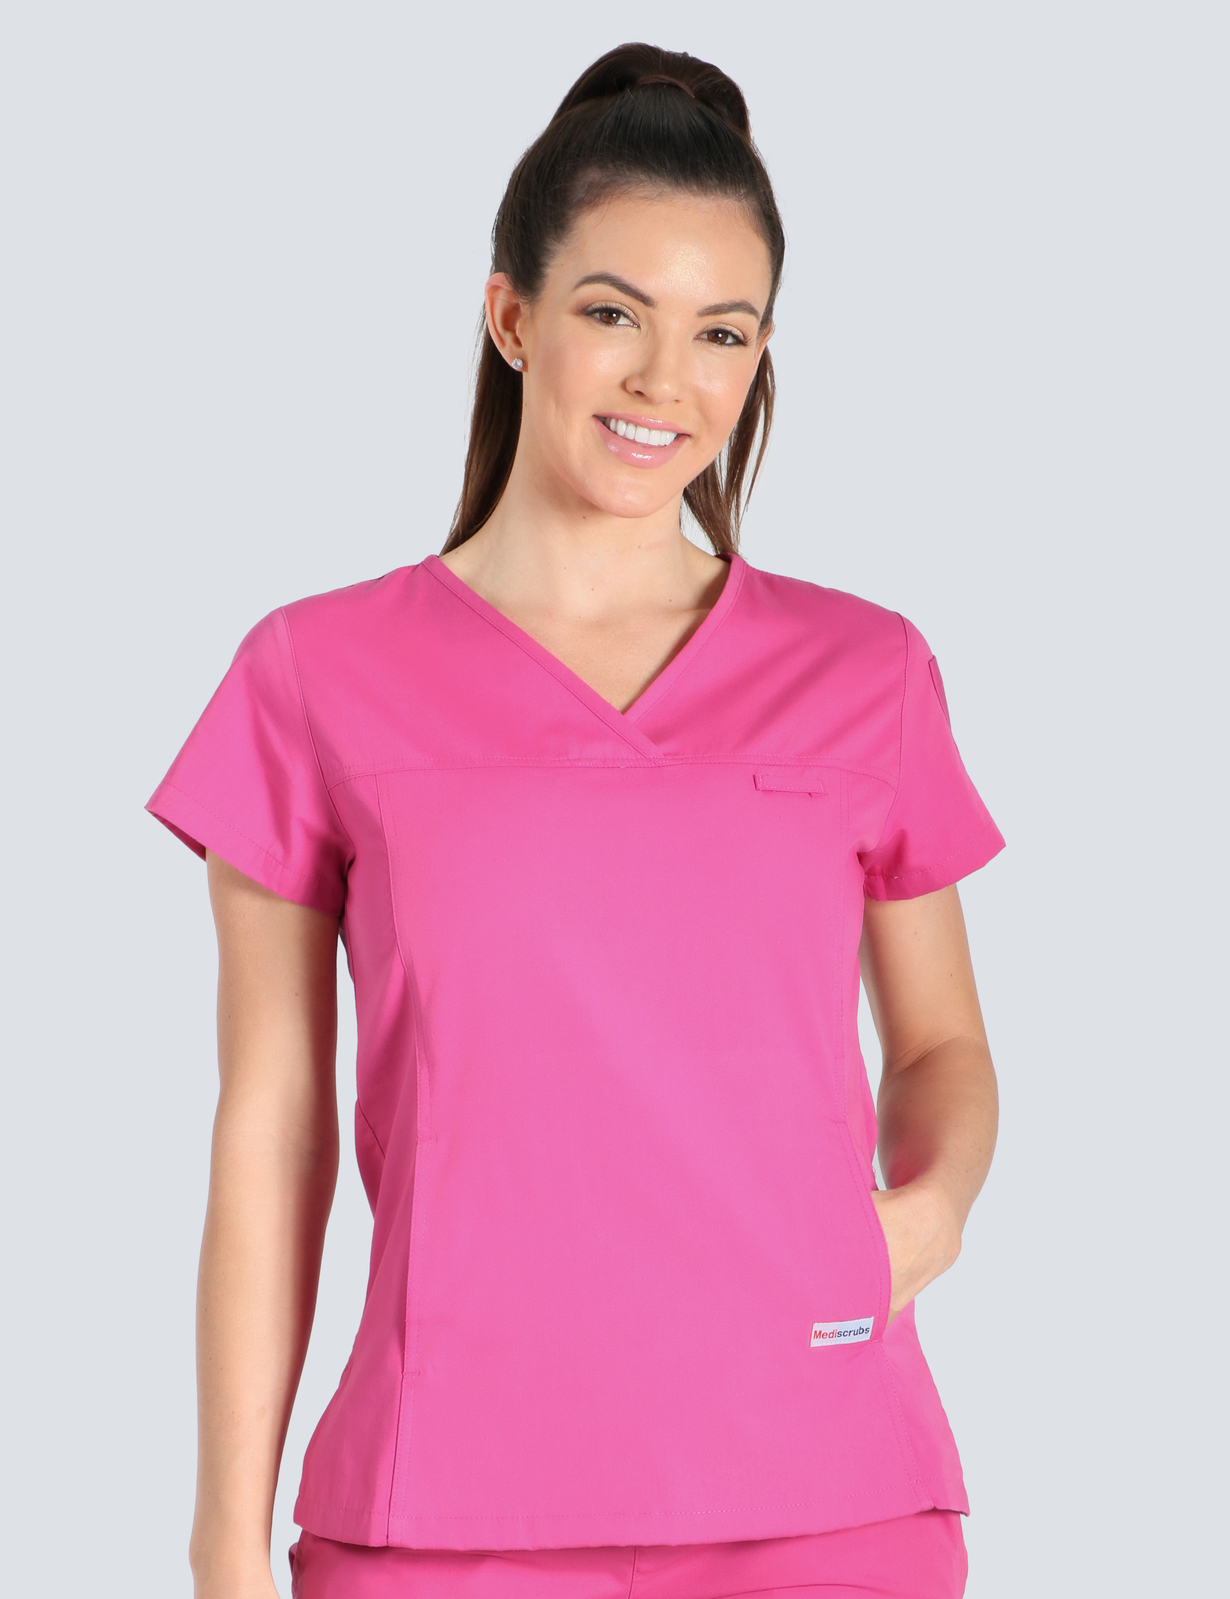 Queensland Children's Hospital Emergency Department Clinical Nurse  Uniform Top Bundle  (Women's Fit Top in Pink  incl Logos)